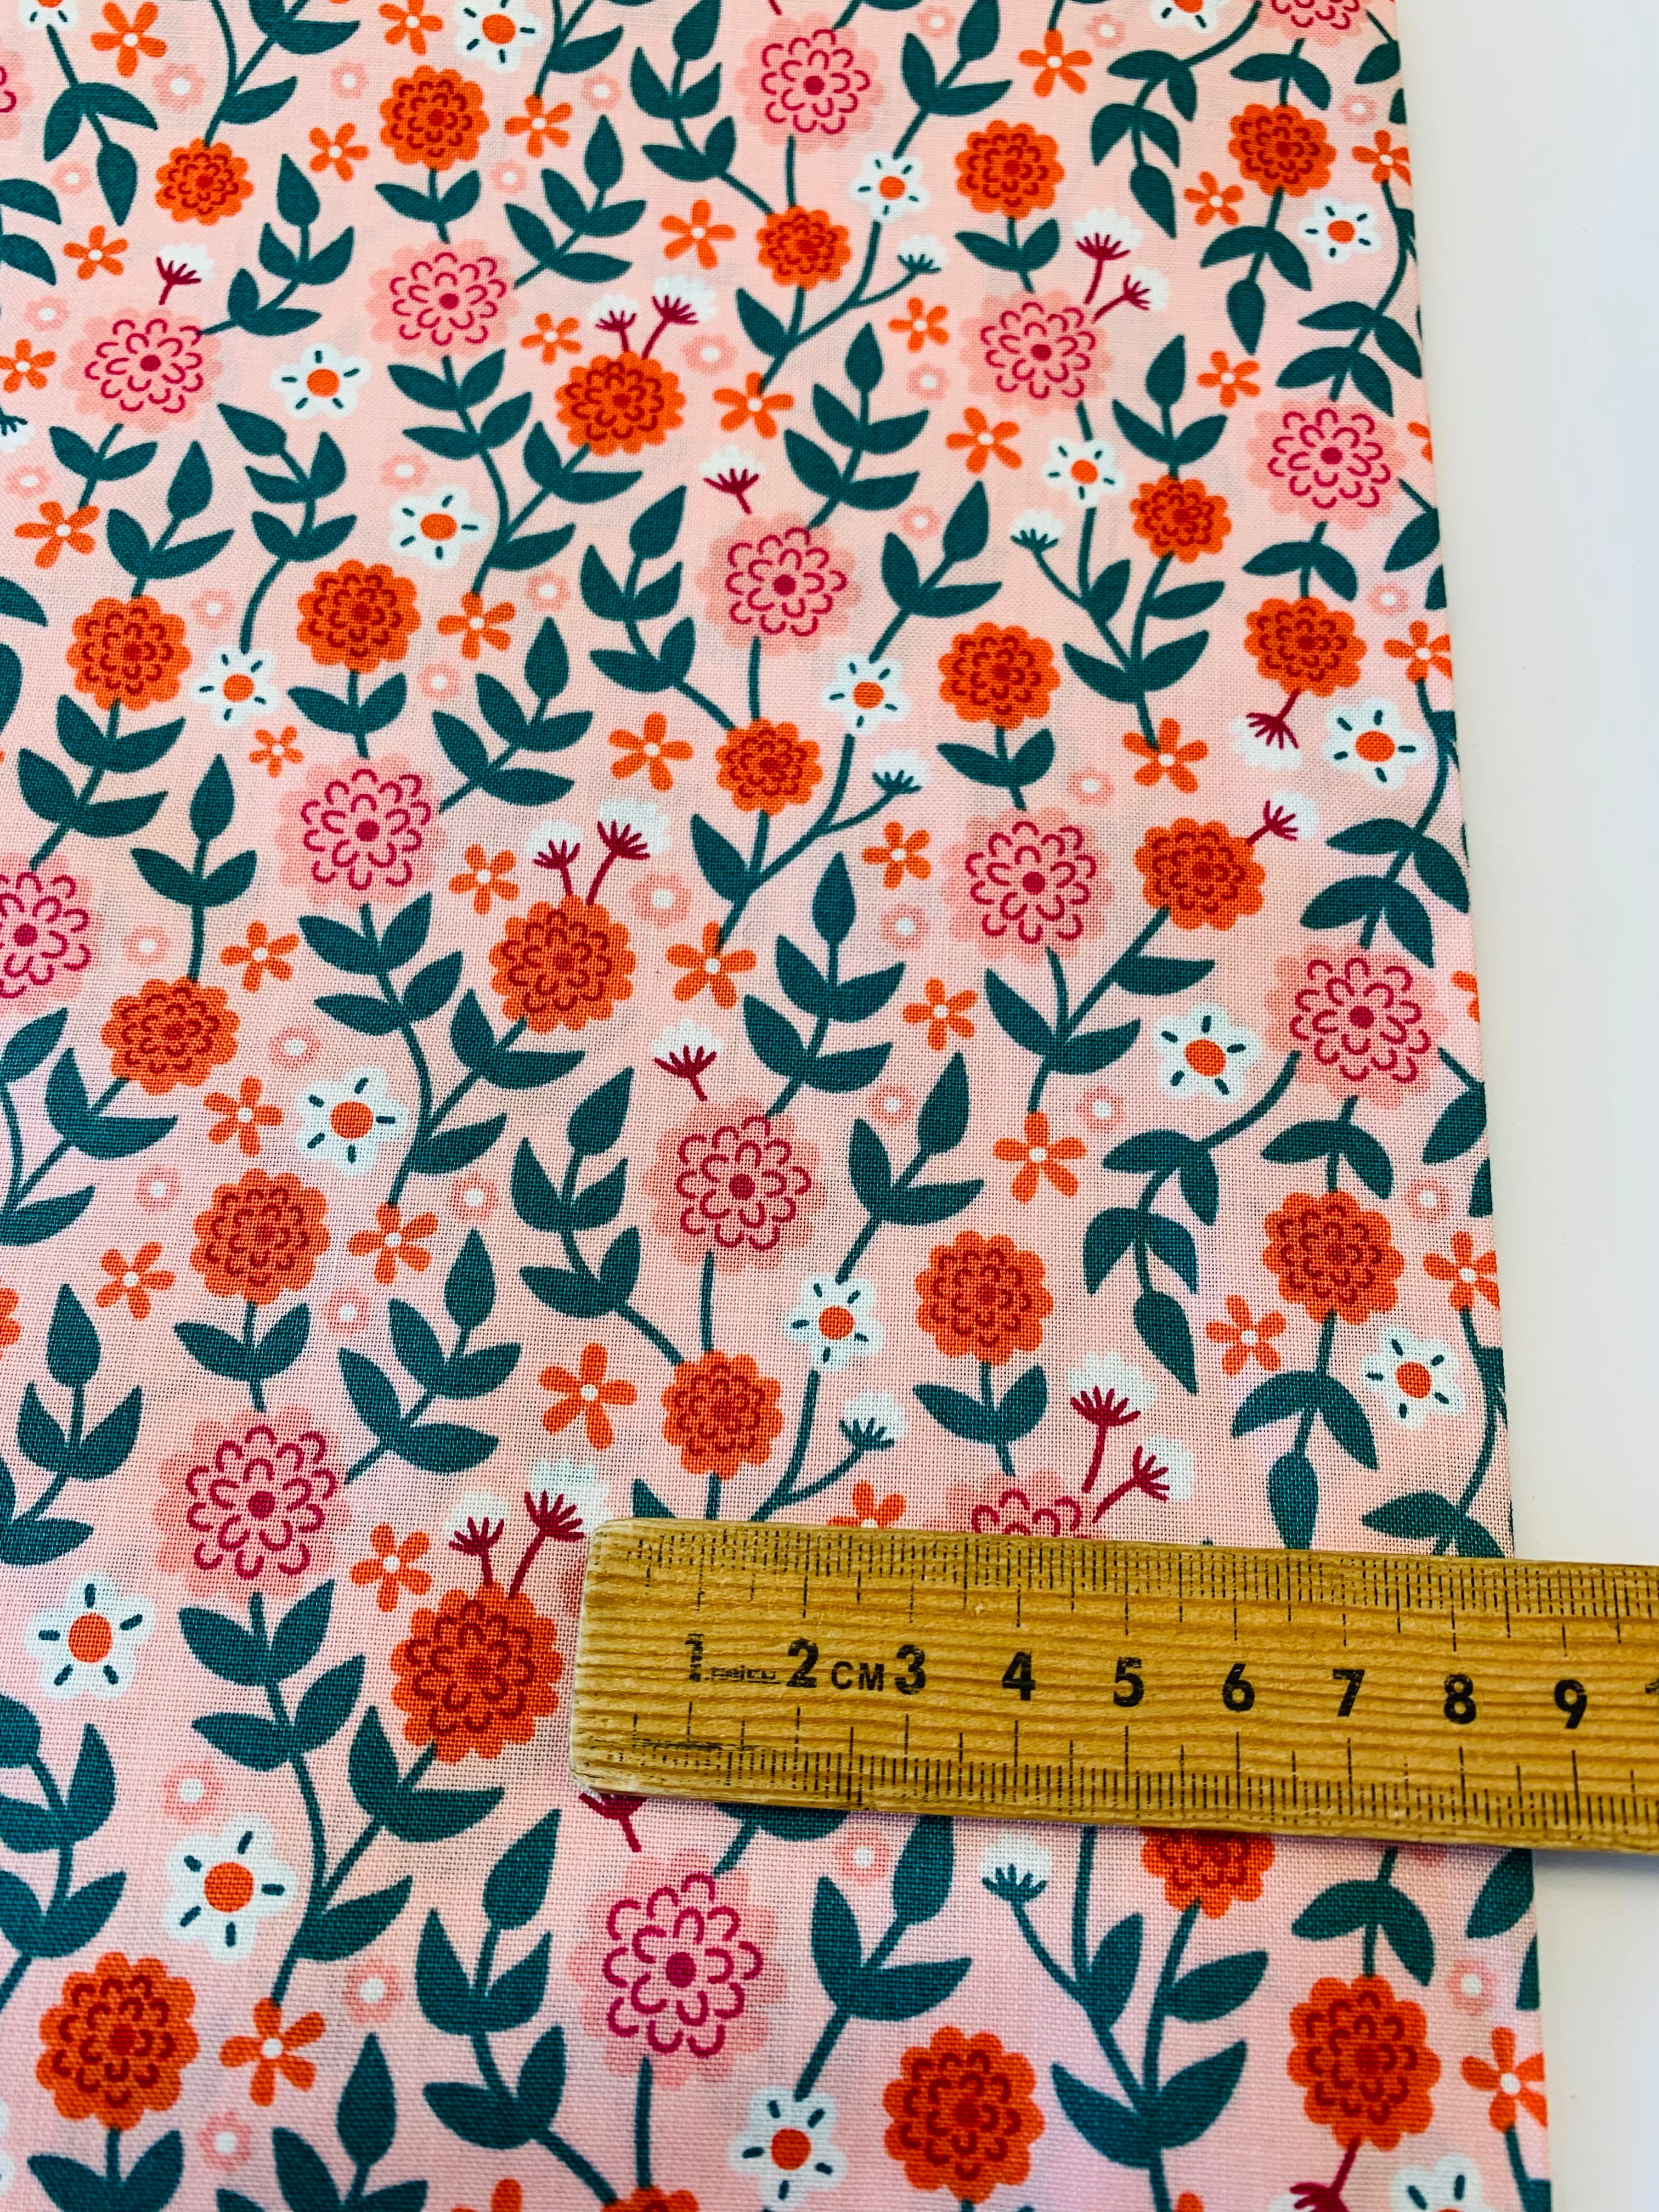 Summer Garden in Watermelon by Felicity Fabrics